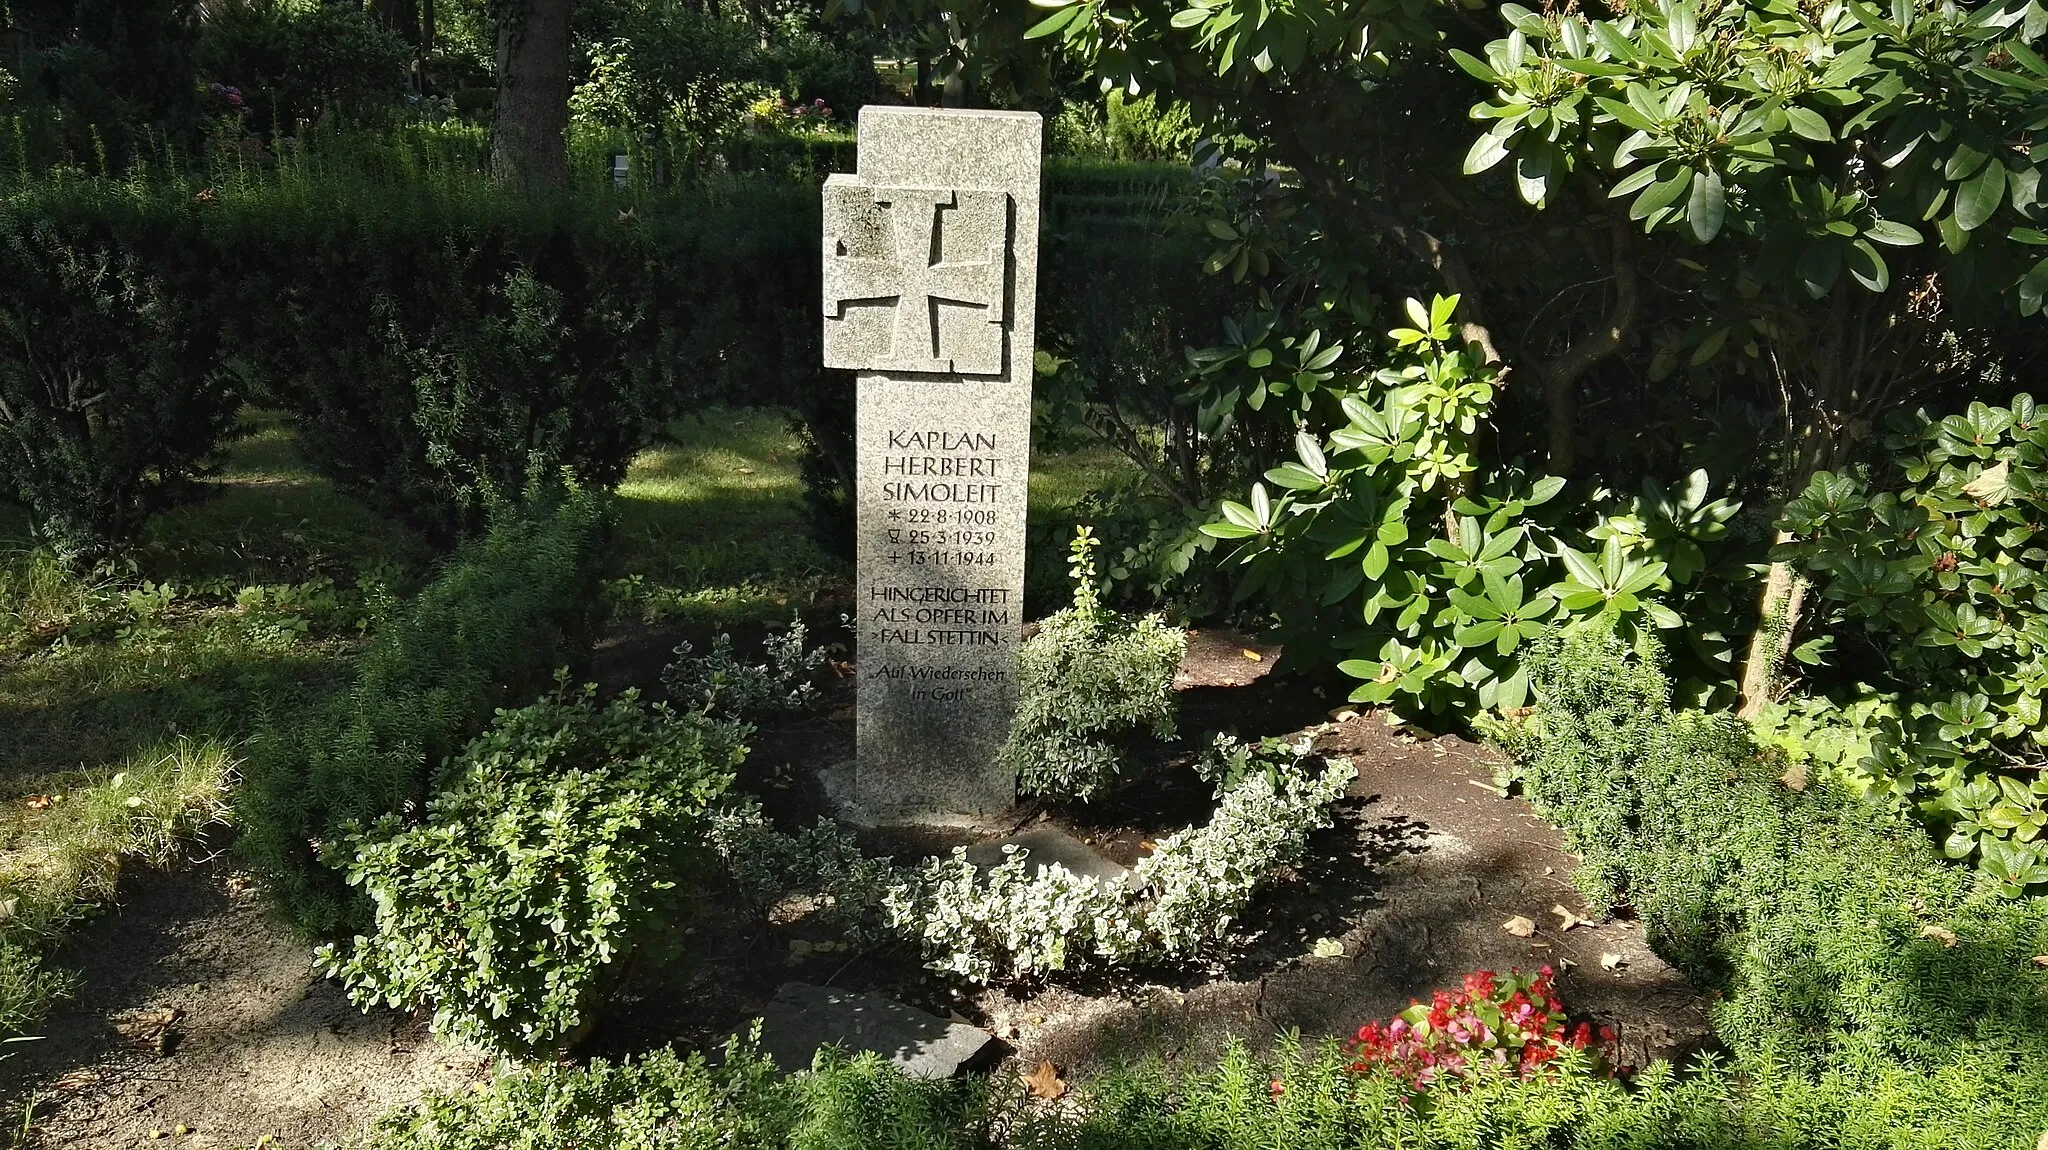 Photo showing: Denkmal für Herbert Simoleit auf dem Domfriedhof Sankt-Hedwig in Berlin-Reinickendorf